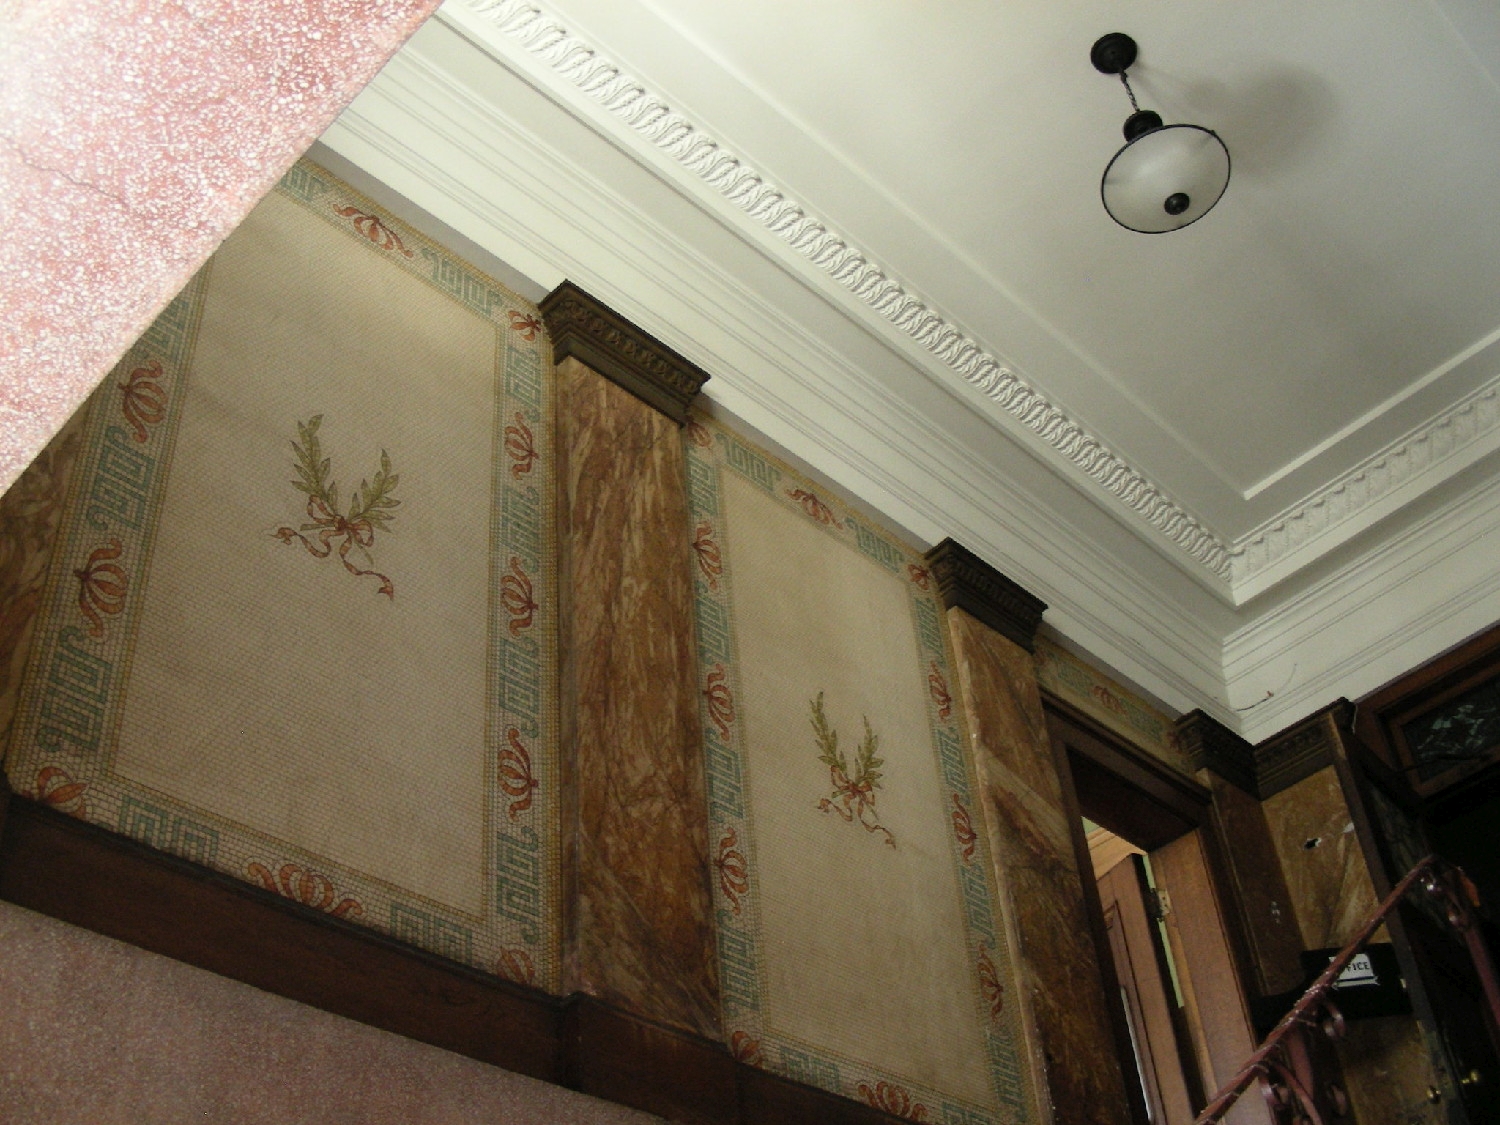 Interior, detail of original tile mosaics at entrance